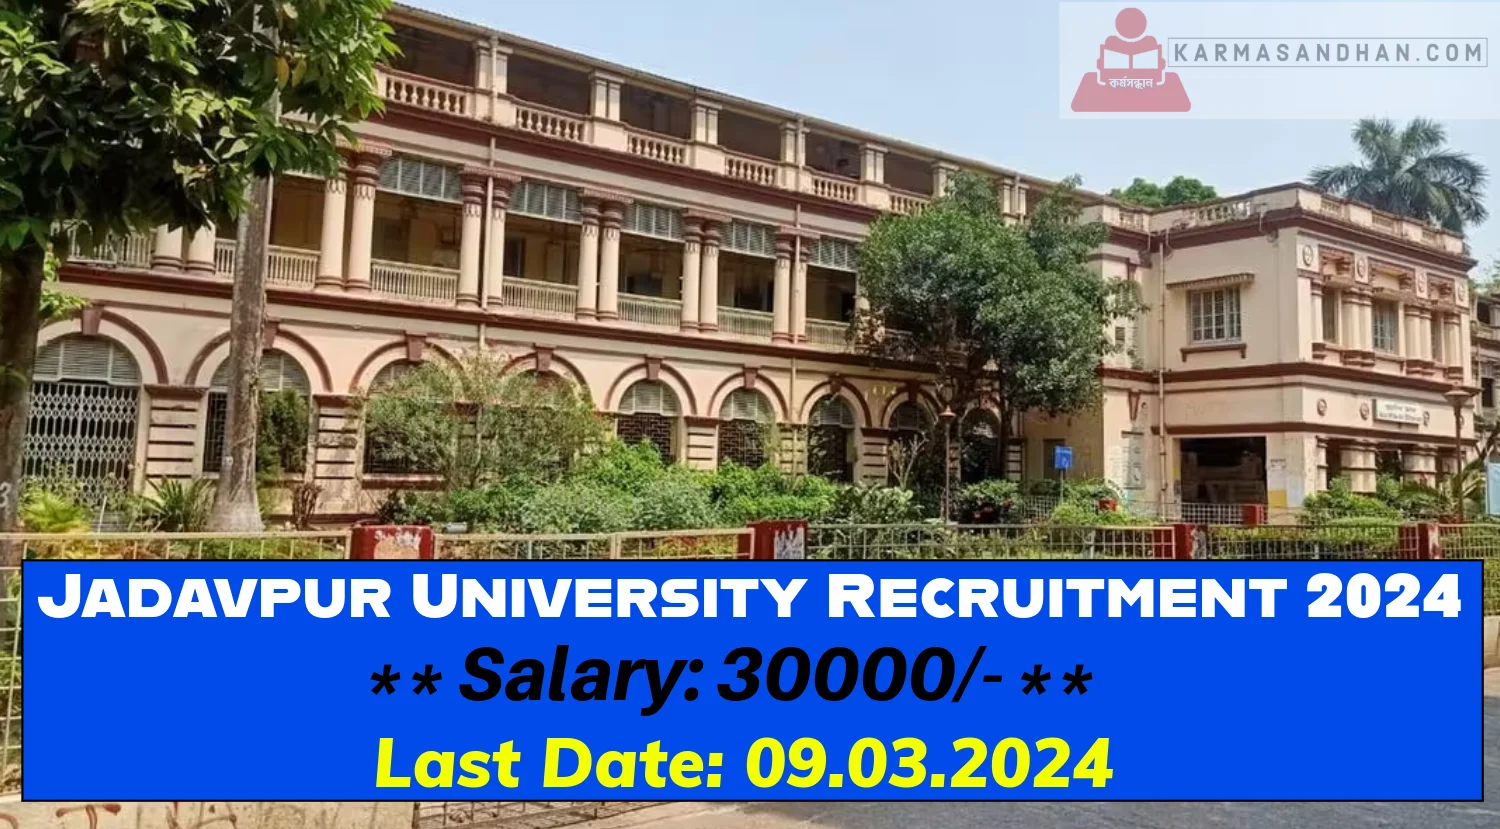 Jadavpur University Recruitment 2024, Check Details